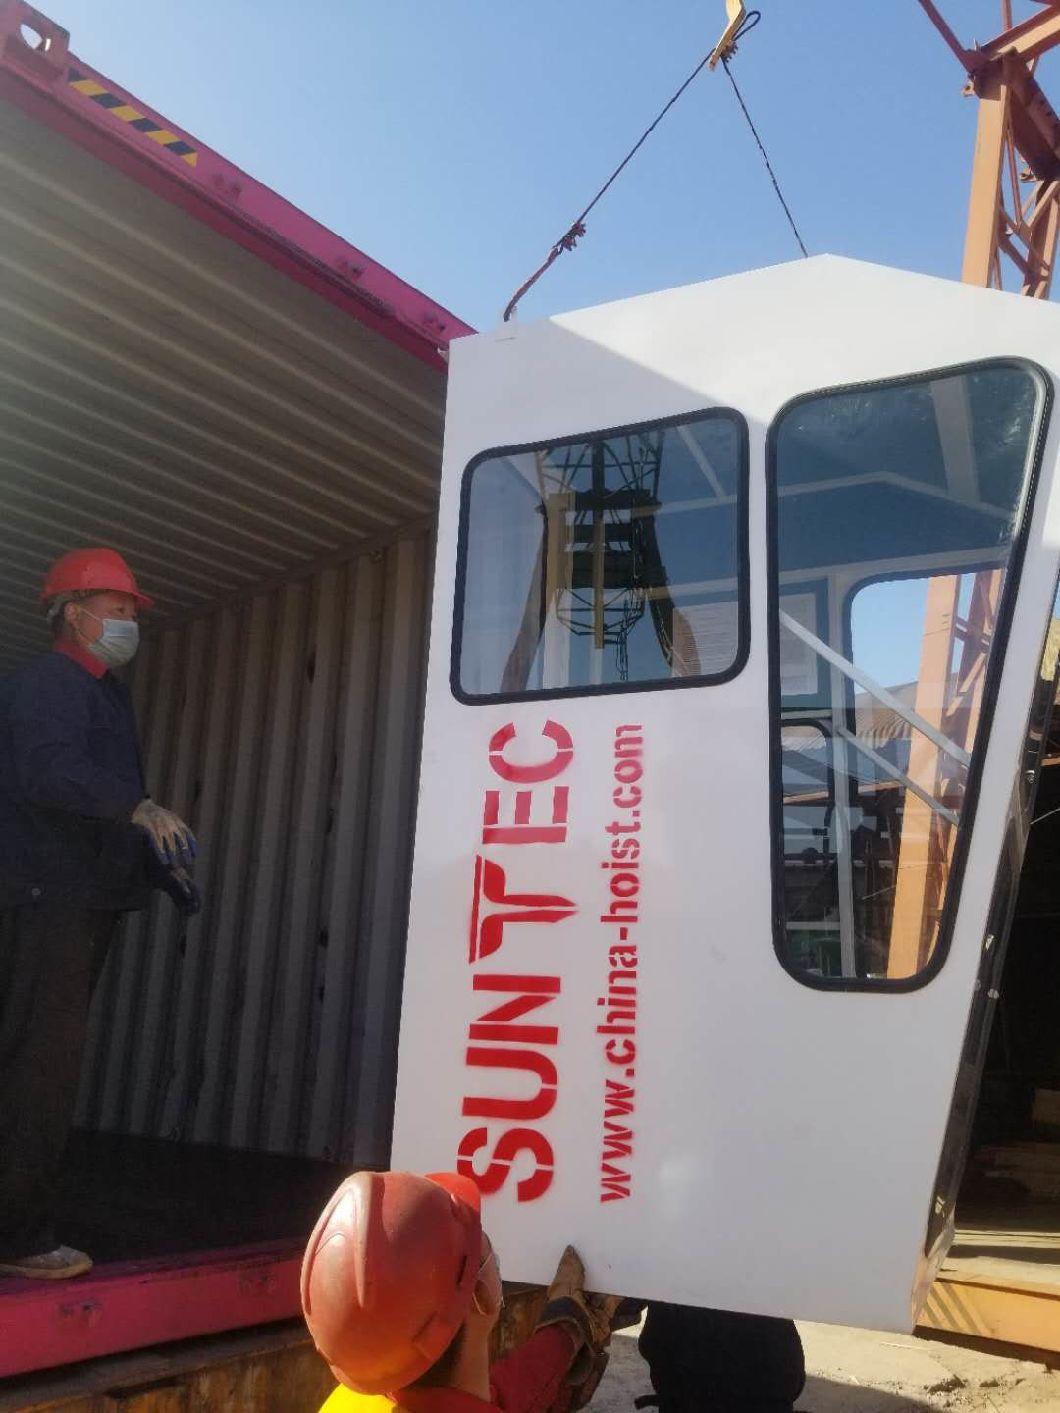 Suntec High Quality Qtz Series Construction Tower Crane, Qtz80 Max Lifting Capacity 8 Tons